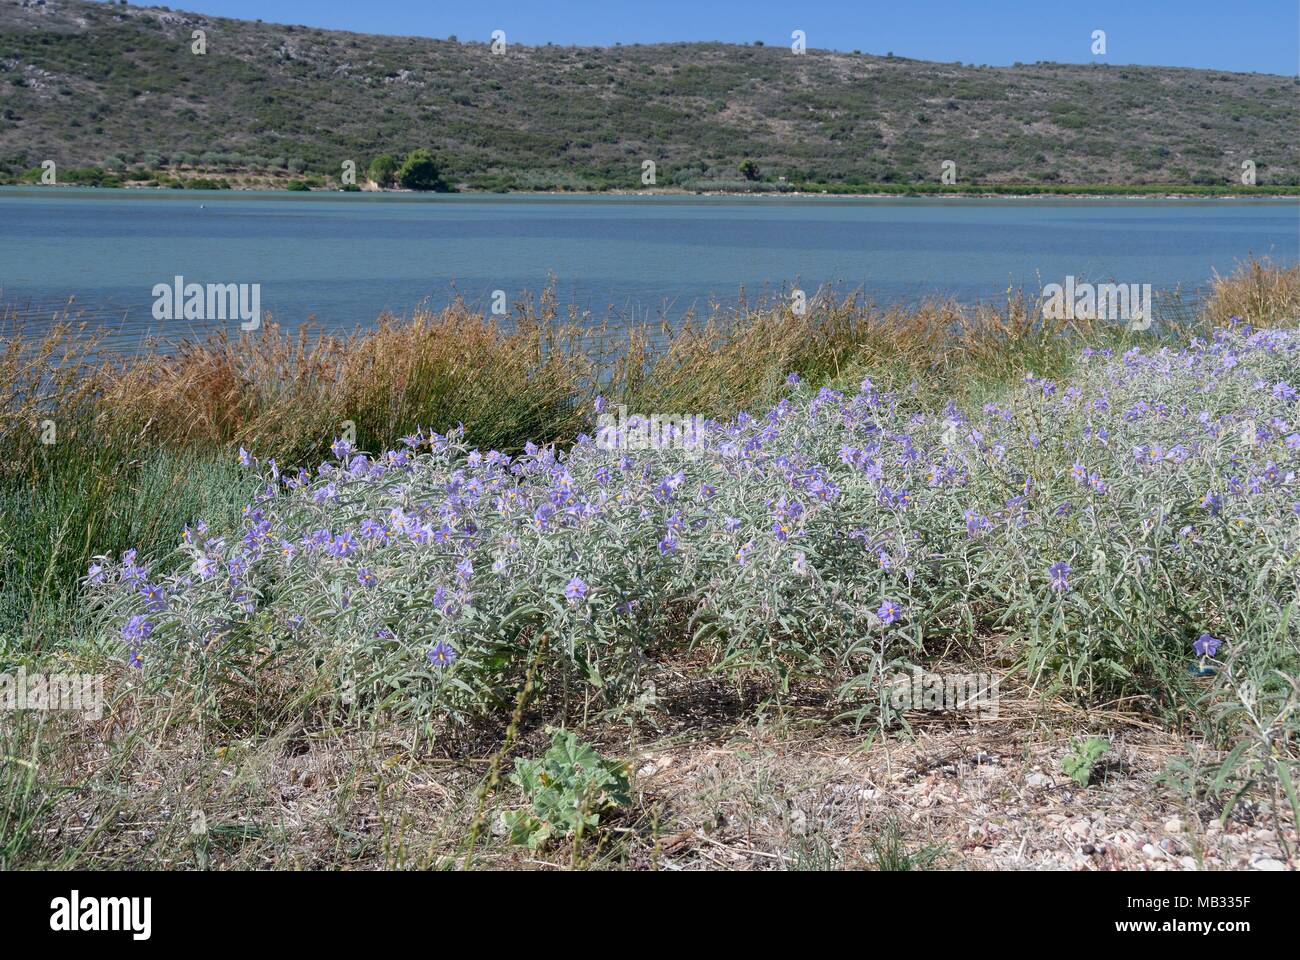 Silverleaf nightshade (Solanum elaeagnifolium) an invasive South and Central American species, flowering in profusion in coastal scrubland, Greece. Stock Photo